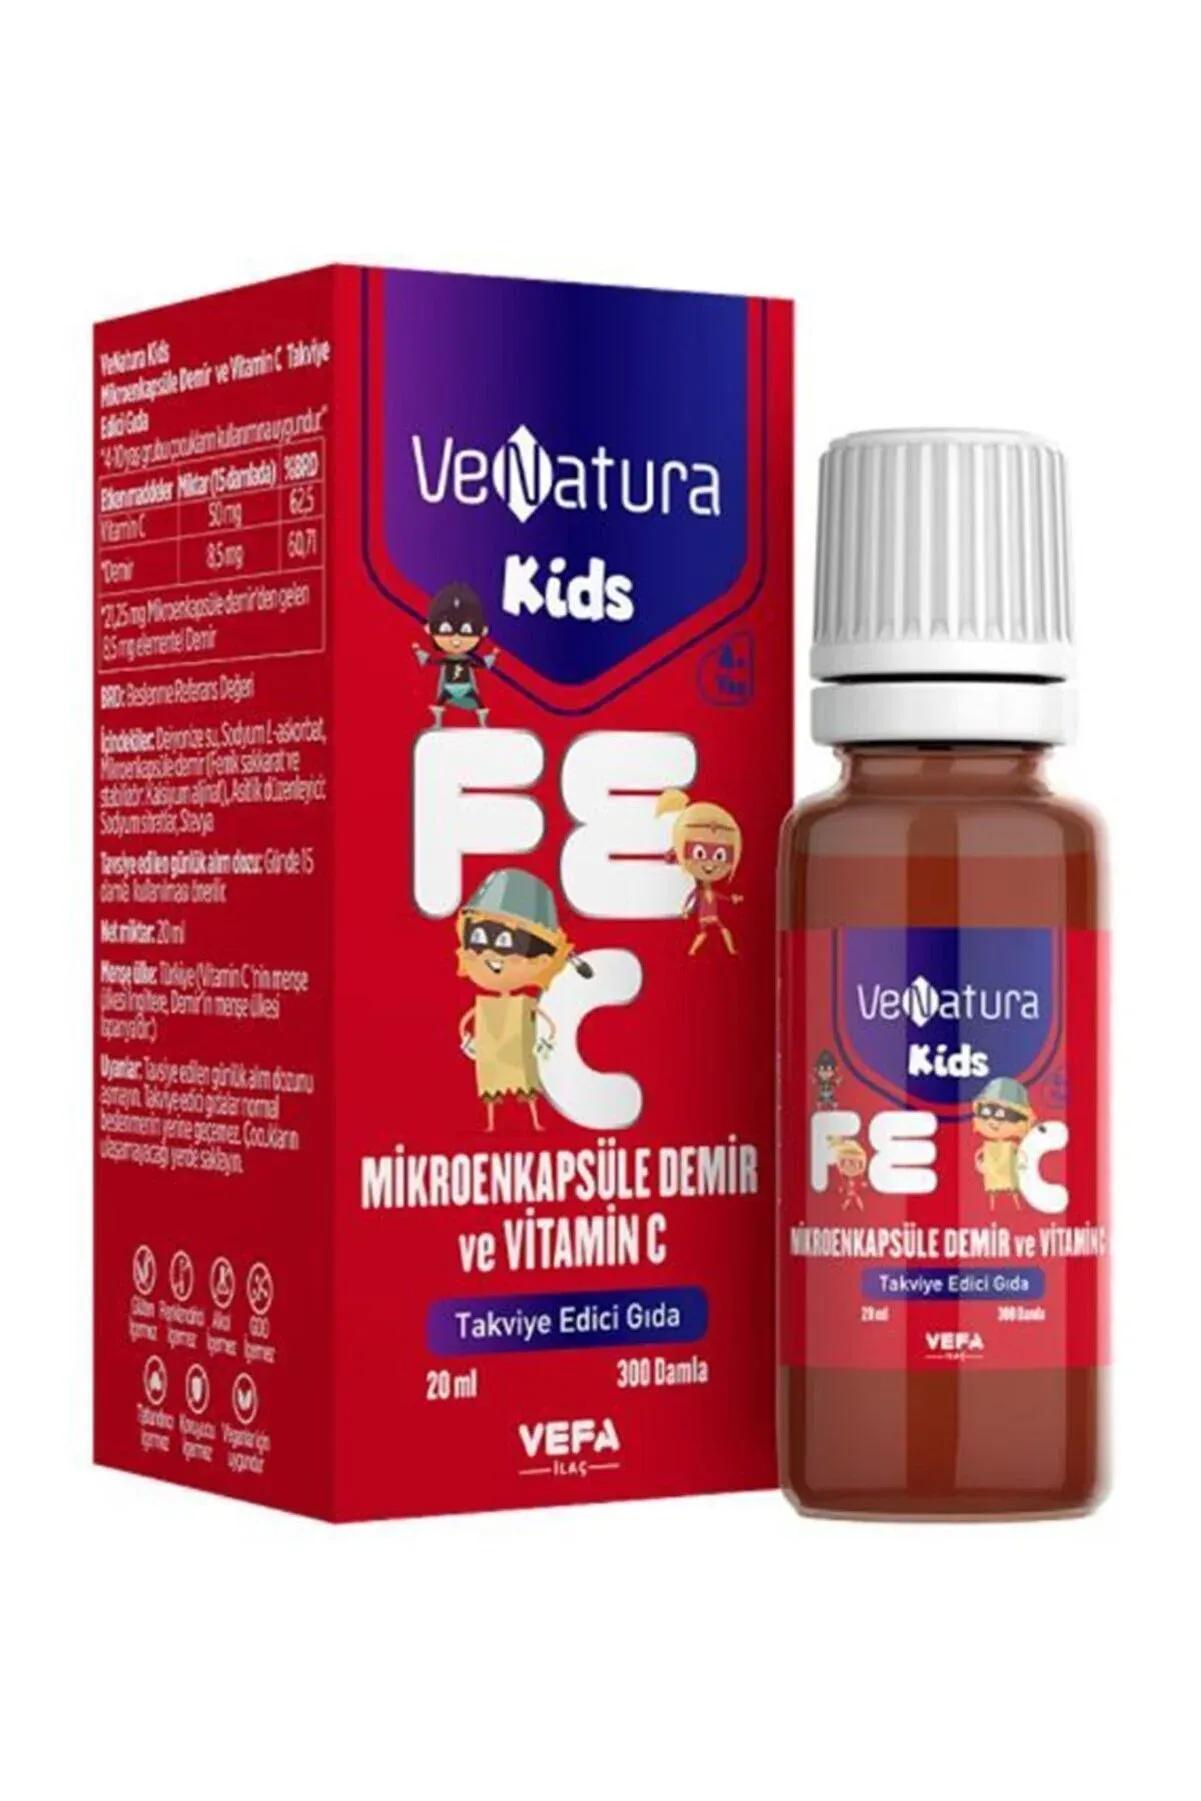 Venatura Kids Mikroenkapsüle Demir Ve Vitamin C İnceleme